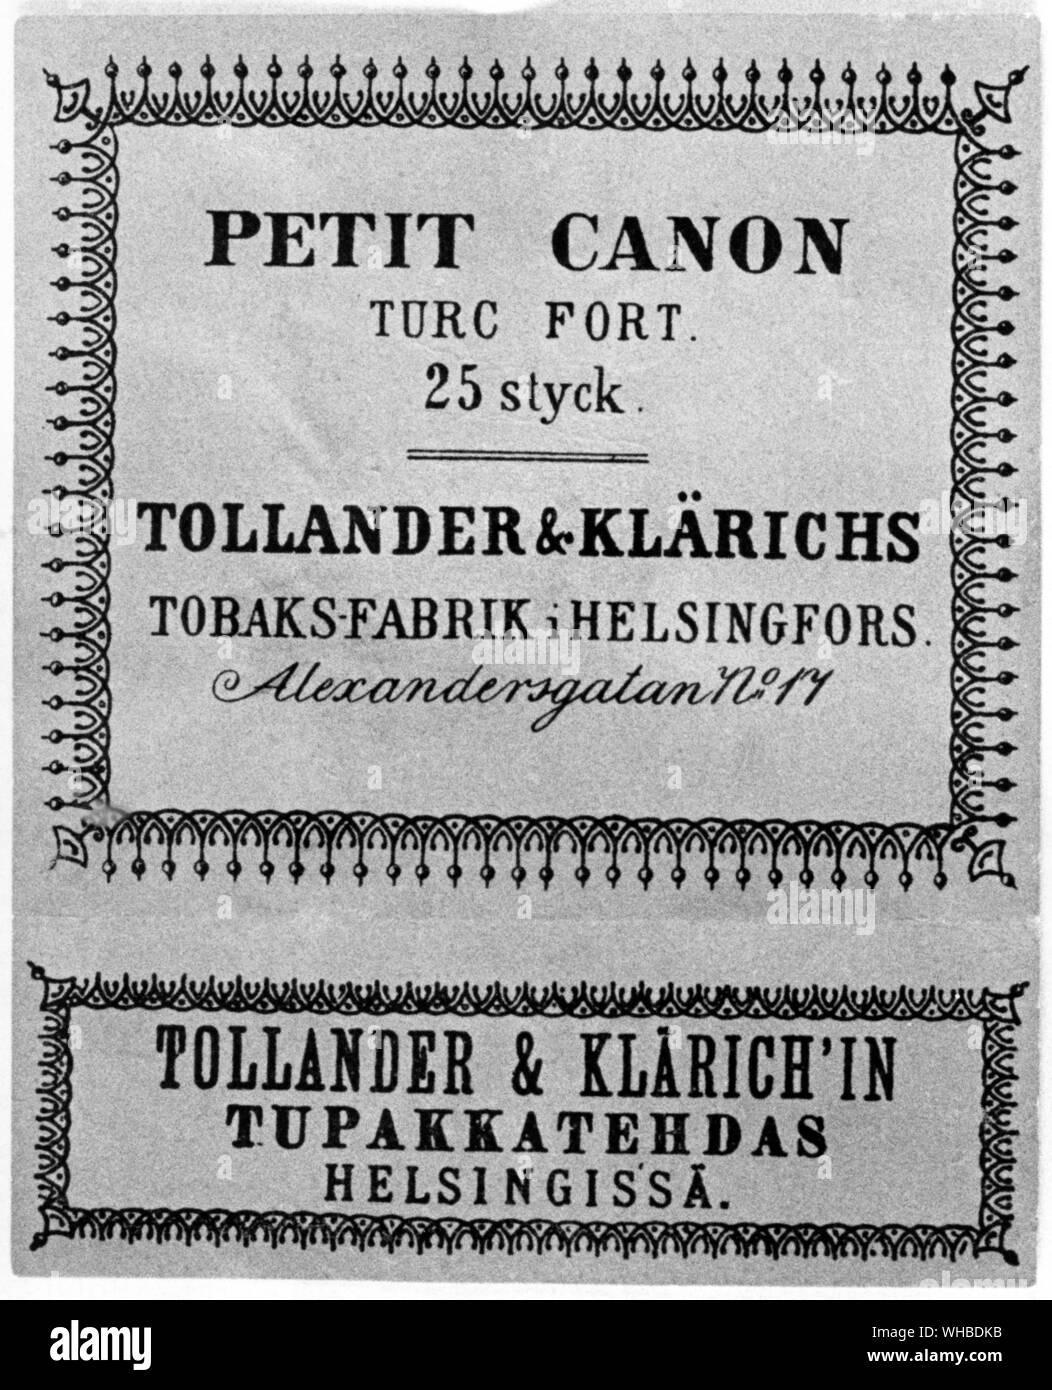 Pacchetto di sigarette 1860 - Petit Canon Turc Fort 25 styck - Tollander & Klarichs Tobaks-fabrik i Helsingfors - Alexandersgatan n. 17 - Tollander & Klarich'in Tupakkatehdas Helsingissa.. Foto Stock